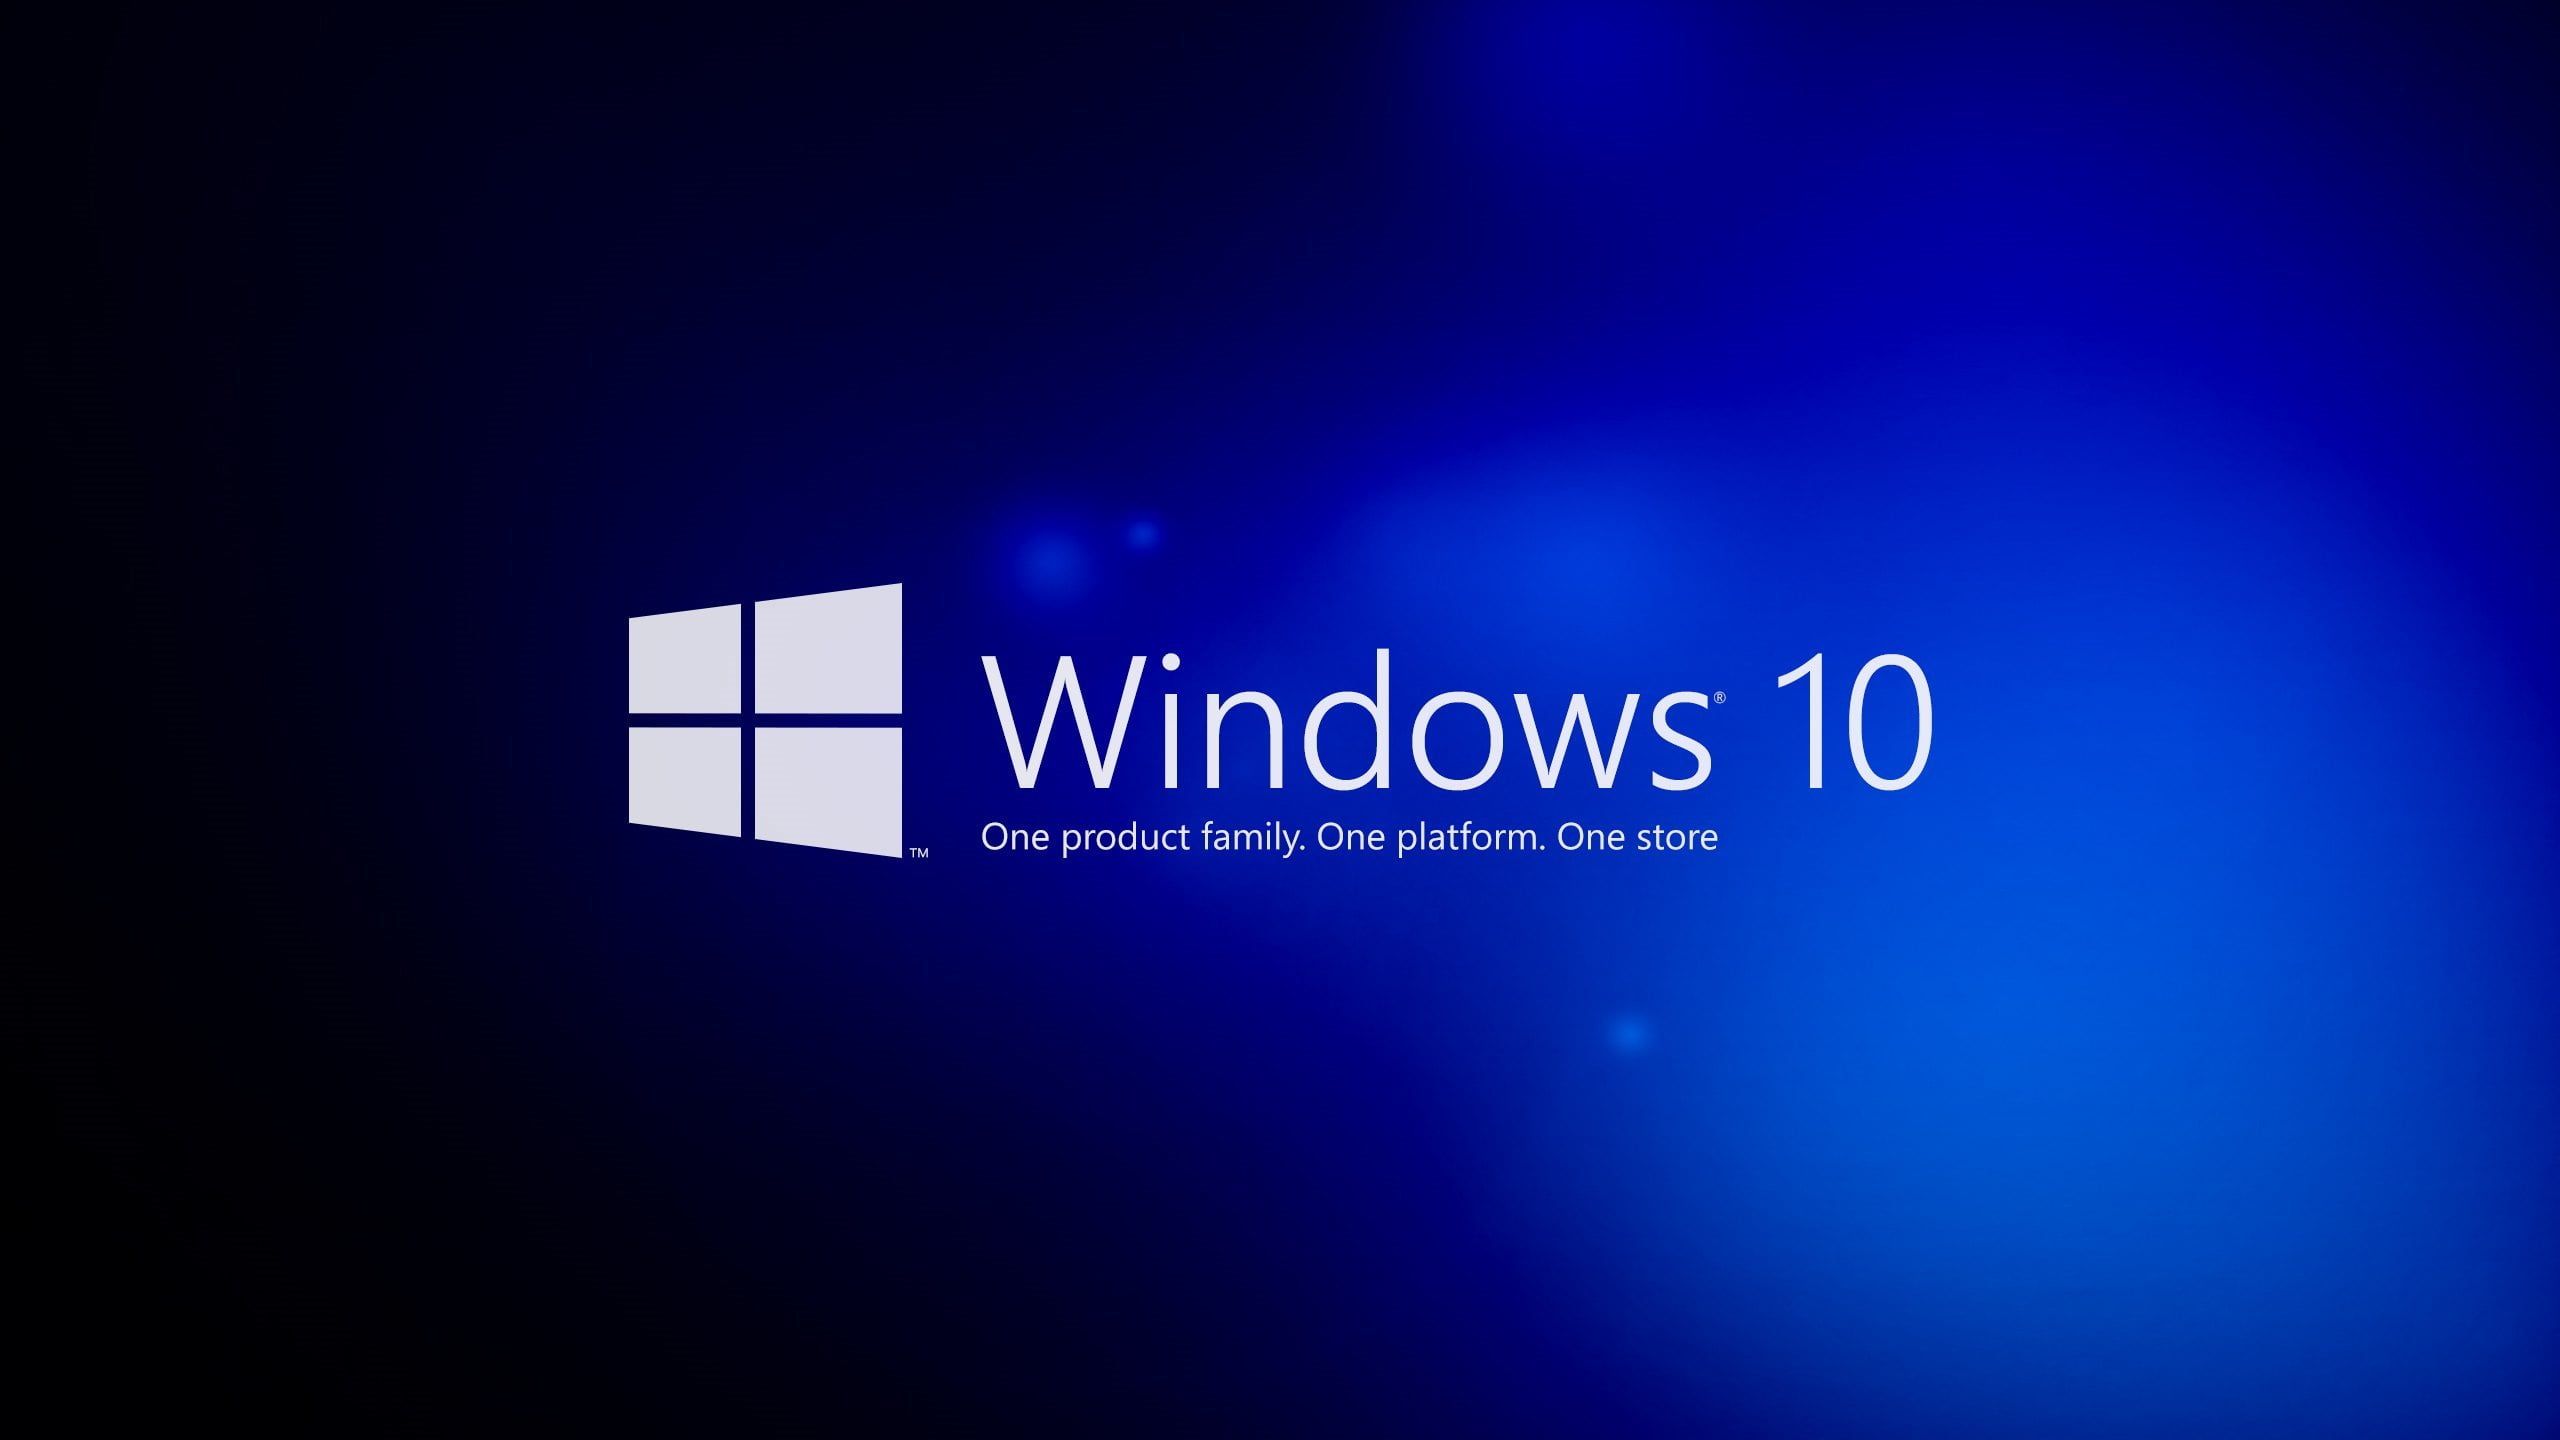 HD wallpaper: Windows 10 logo, Wallpaper, 10 microsoft, blue, background, sign 4K of Wallpaper for Andriod